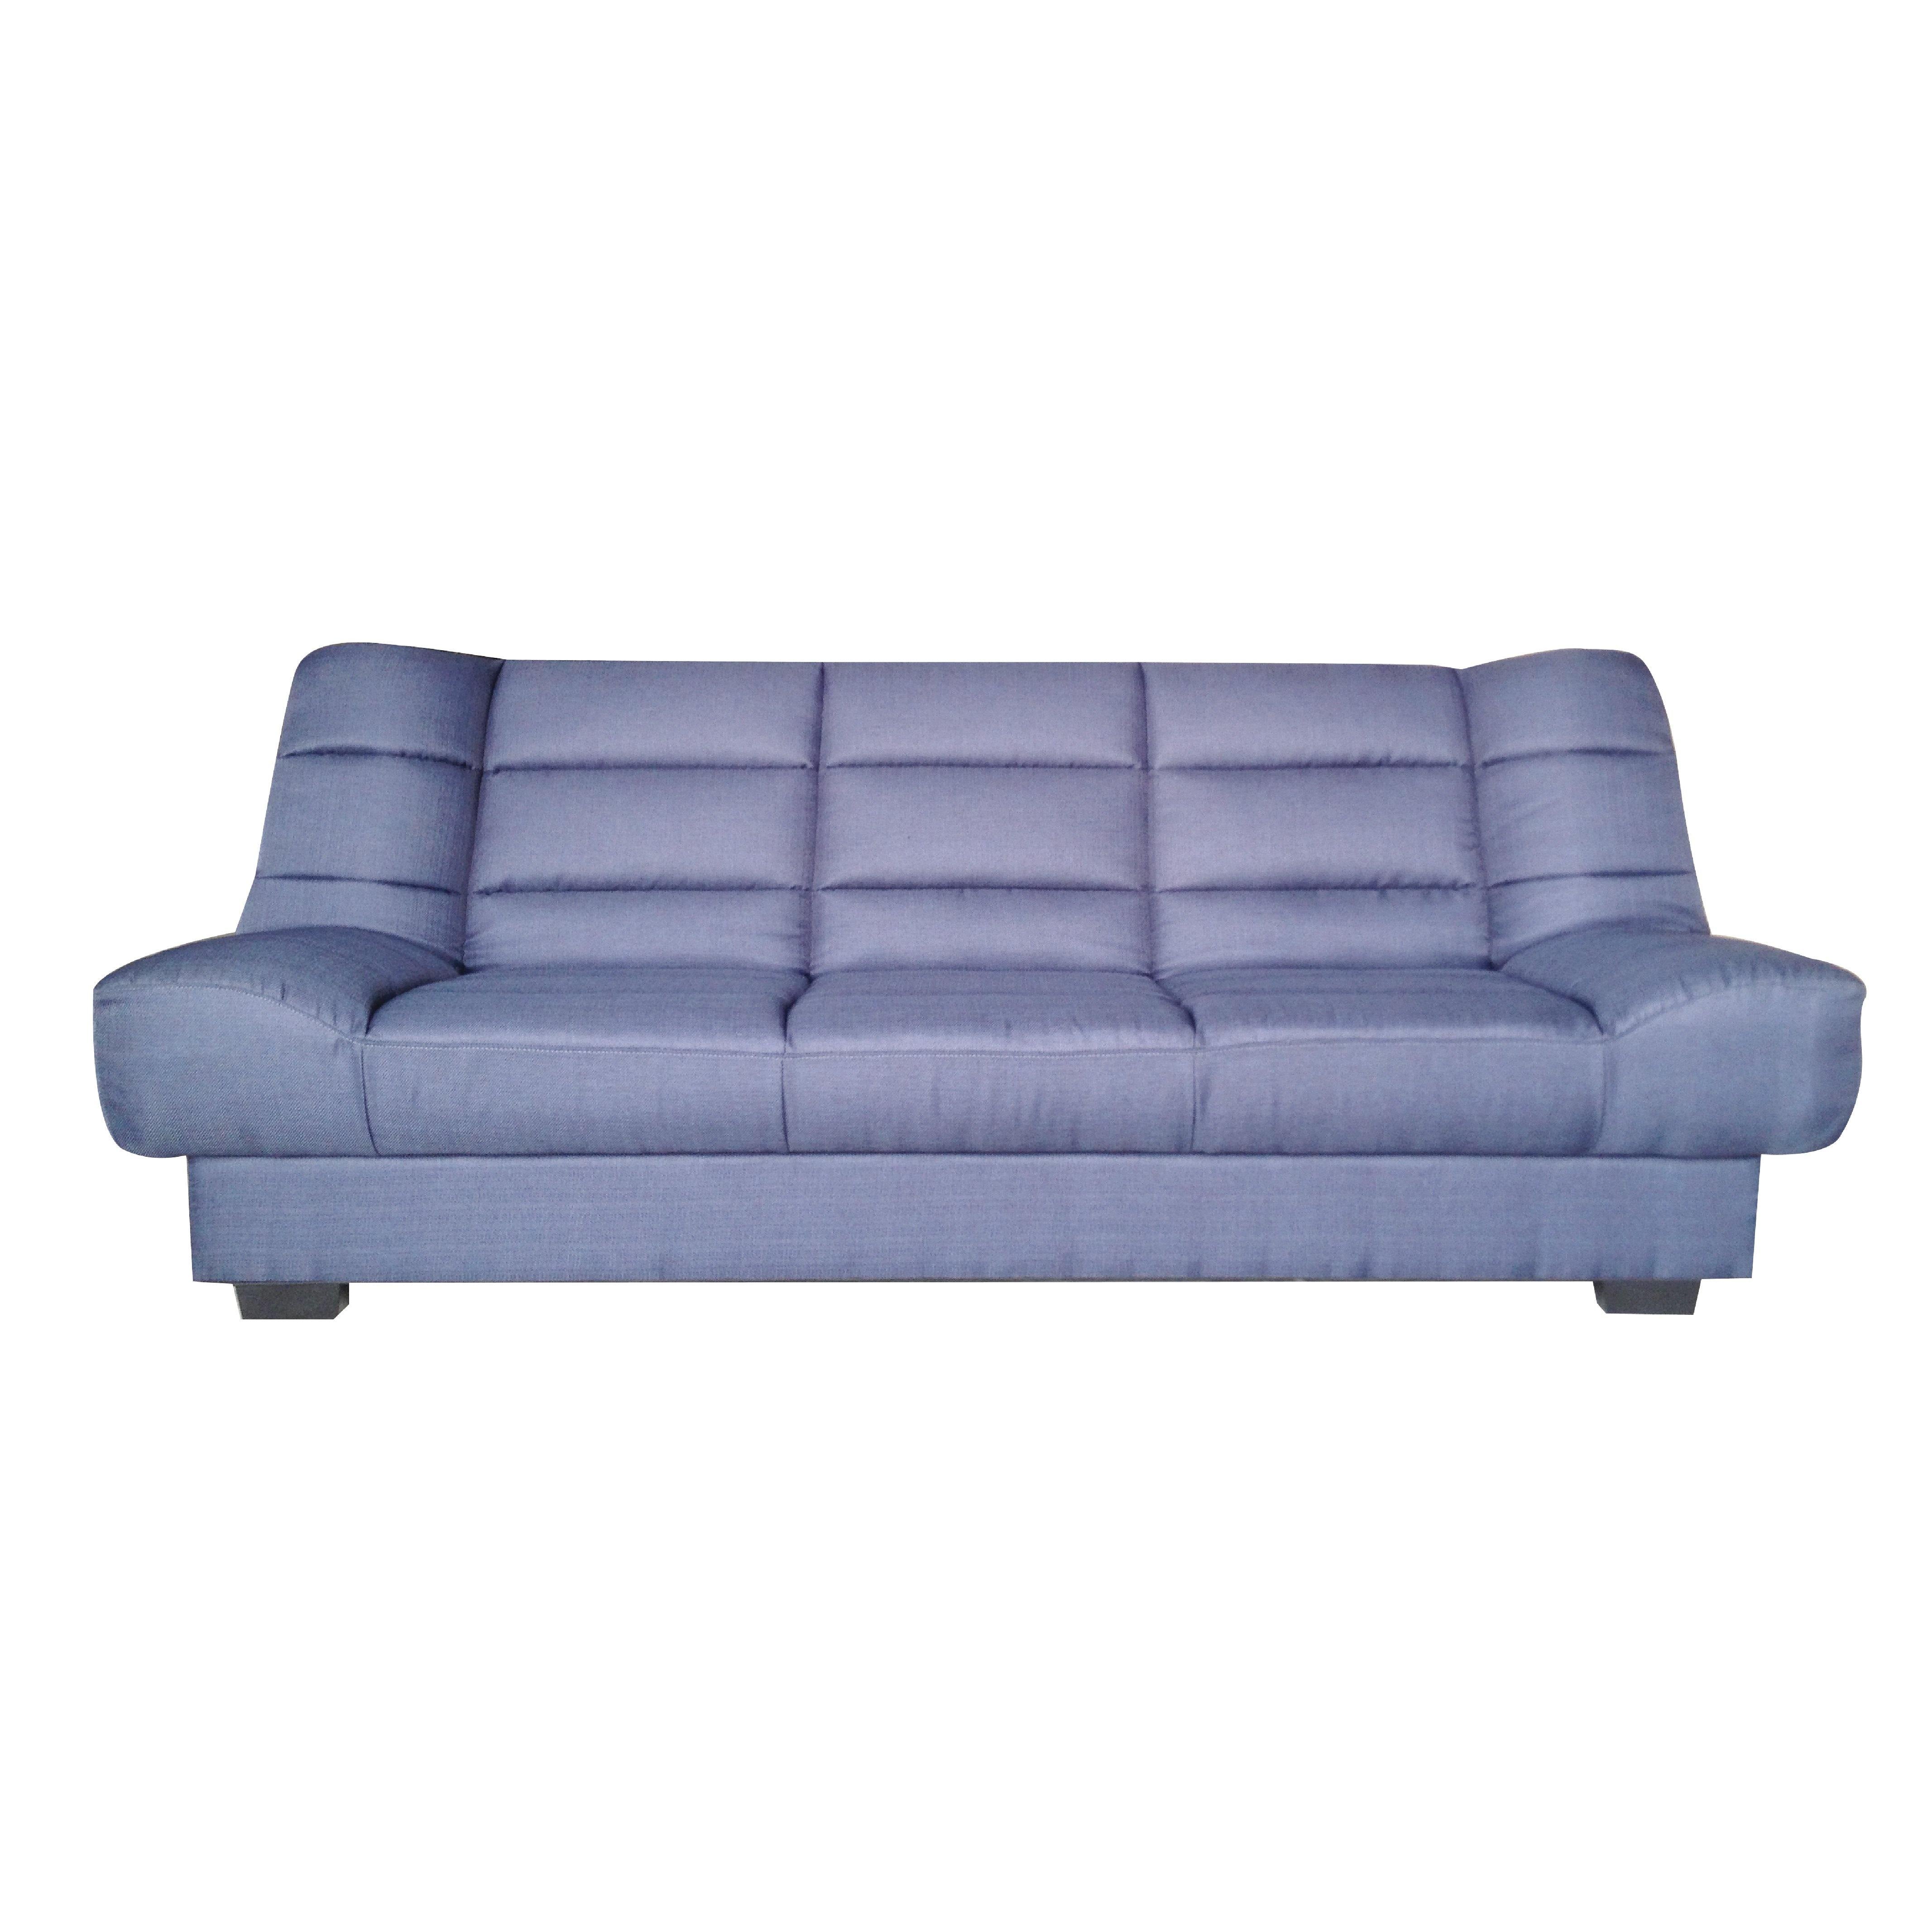 Eavan 3 Seater Sofa Bed Fabric